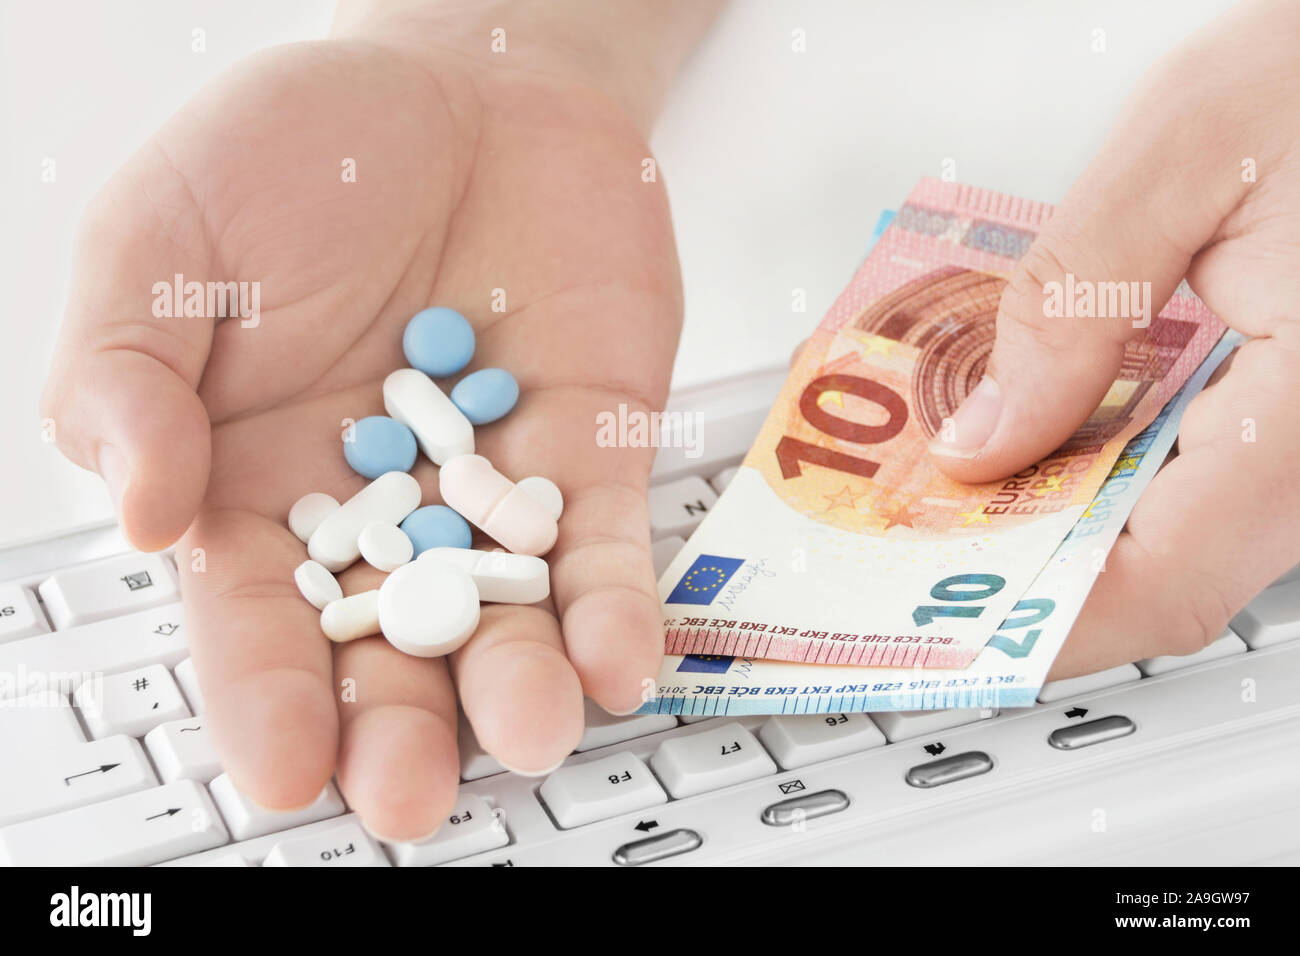 Medicine, hands and money Stock Photo